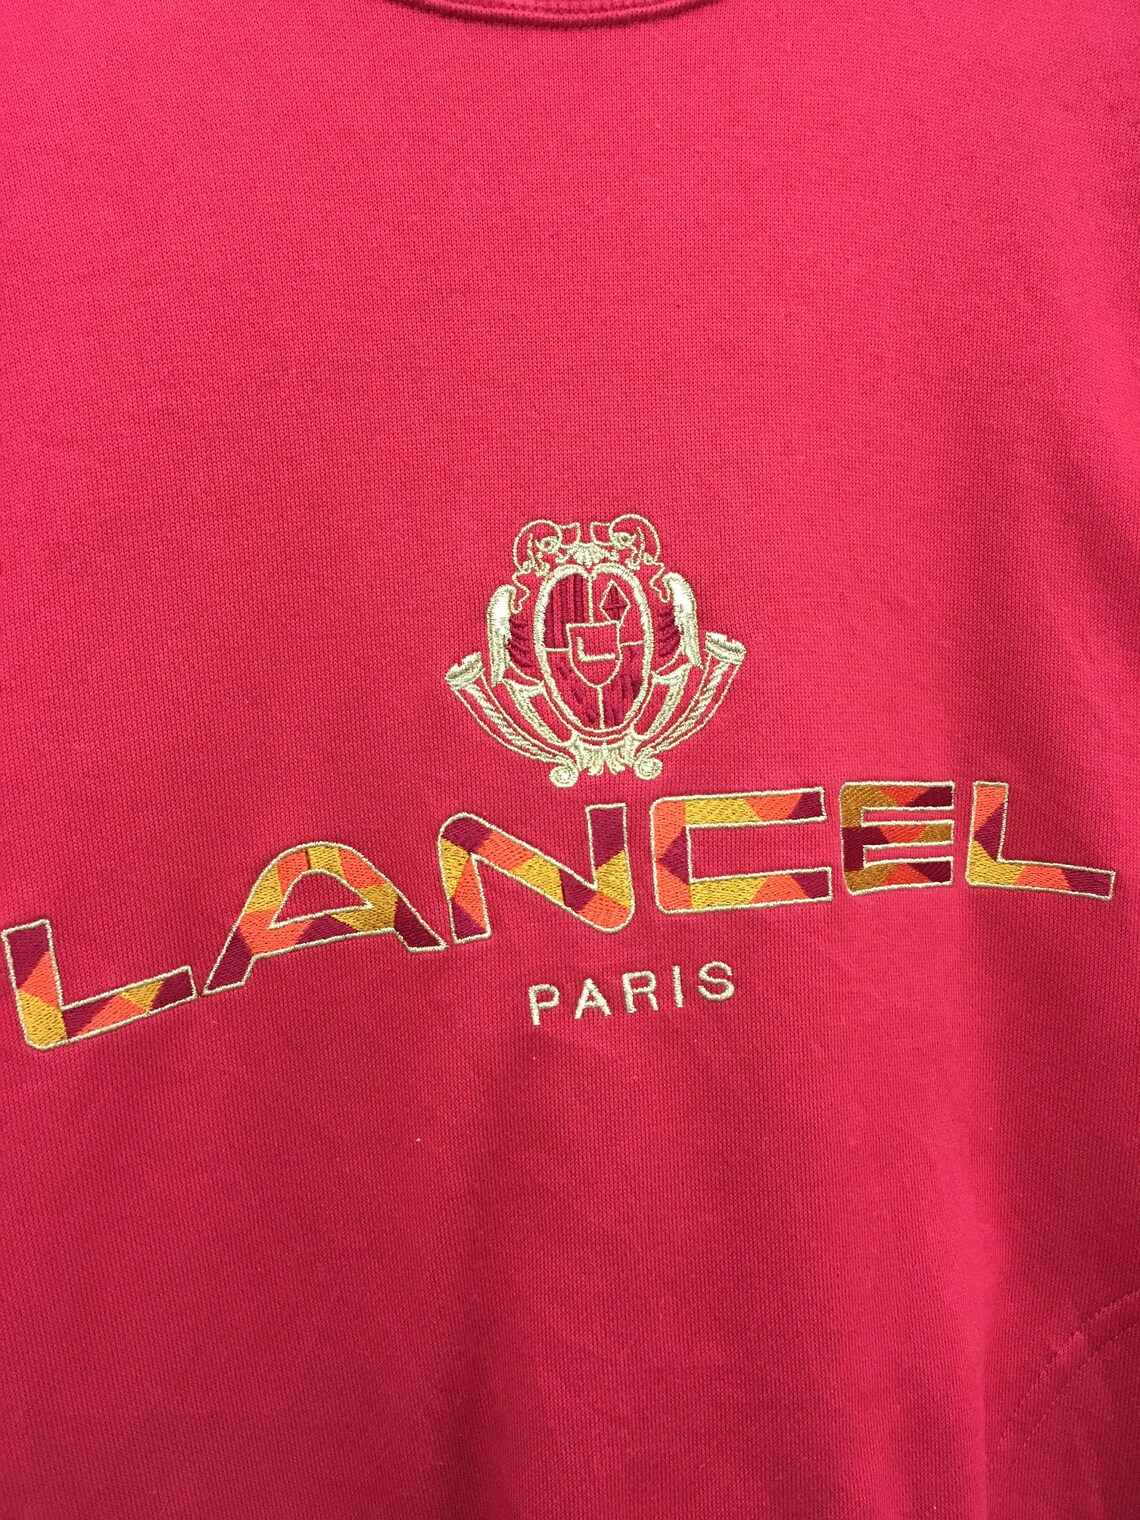 Rare Vintage 90's LANCEL Paris Sweatshirt Embroidery | Etsy